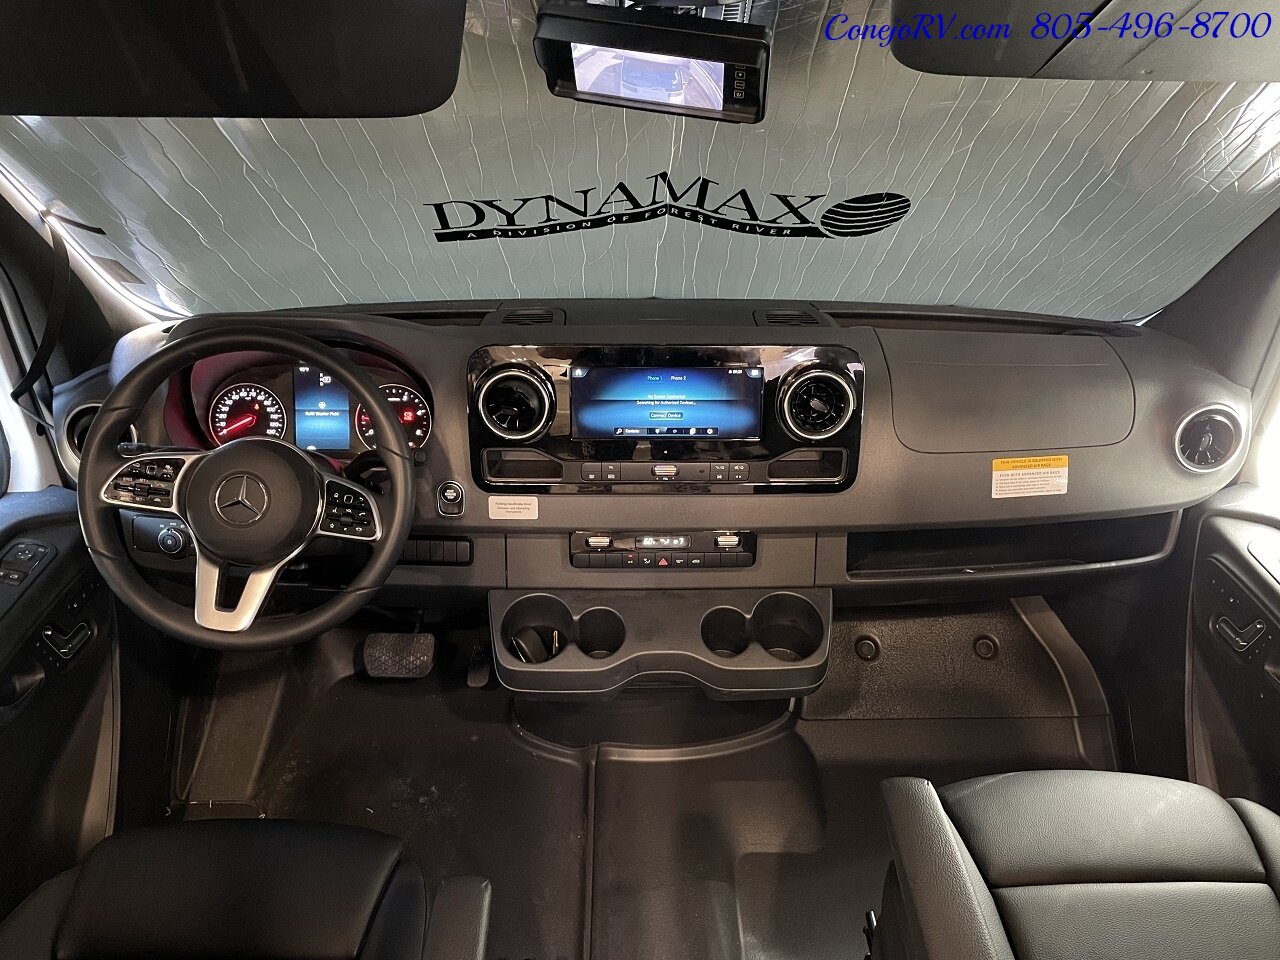 2024 DYNAMAX Isata 3 Series 24FW Full-Wall Slide HYDRAULIC LEVELERS Full Body Paint  Mercedes Turbo Diesel - Photo 32 - Thousand Oaks, CA 91360